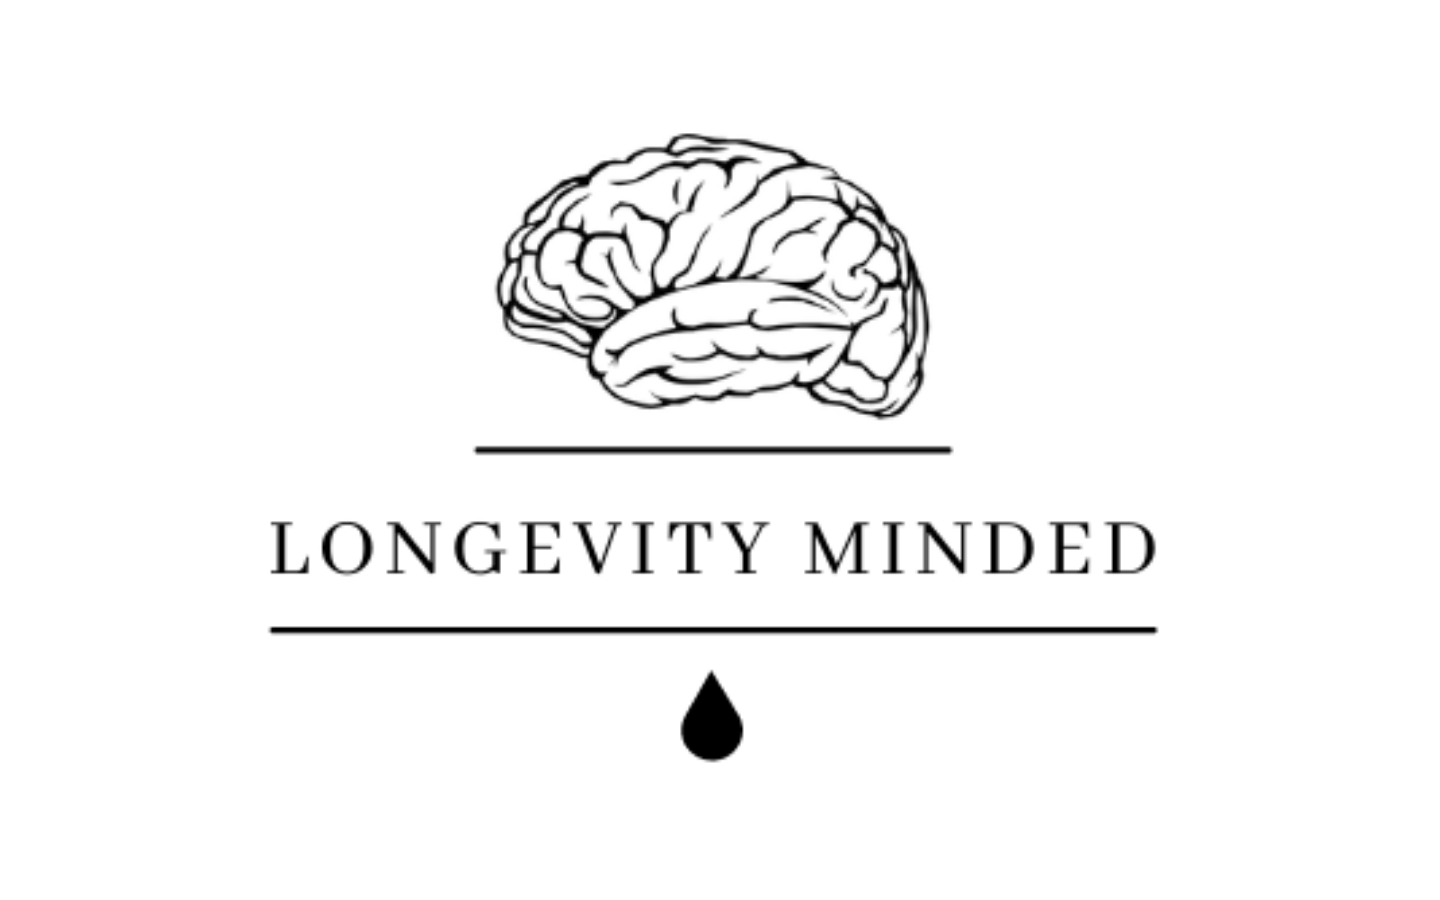  Longevity Minded